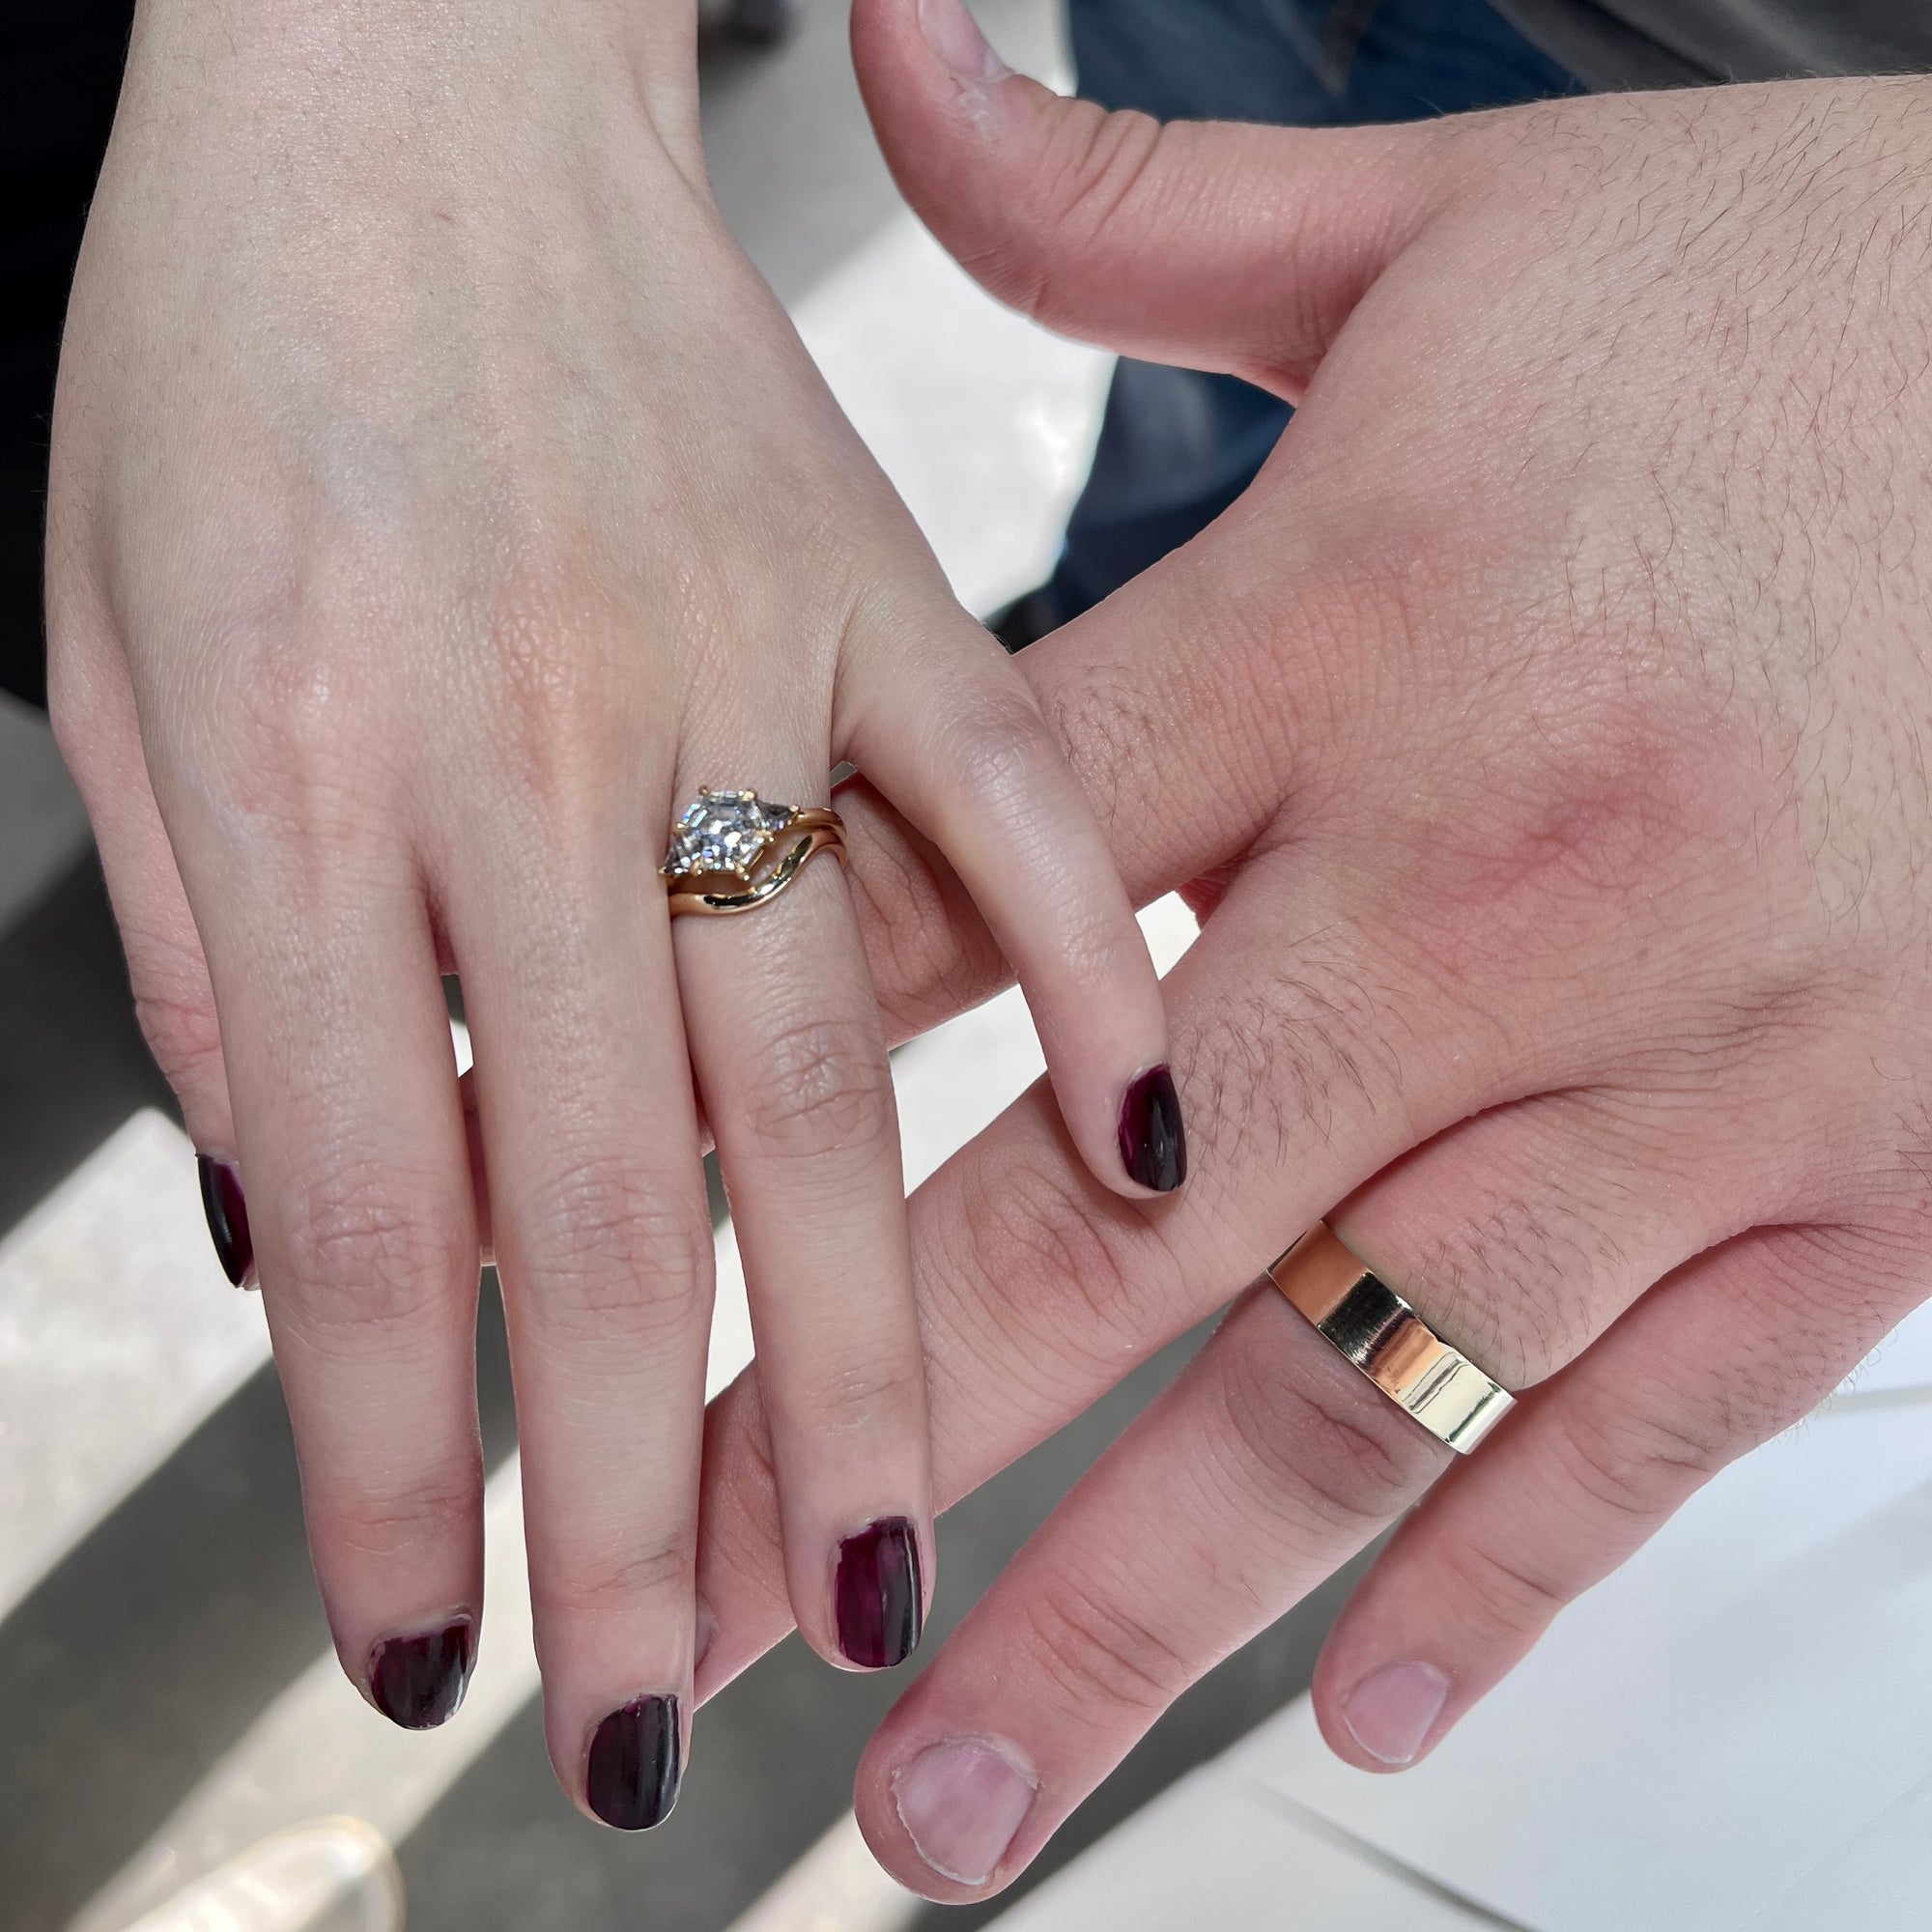 Make your own wedding rings in Phoenix, AZ